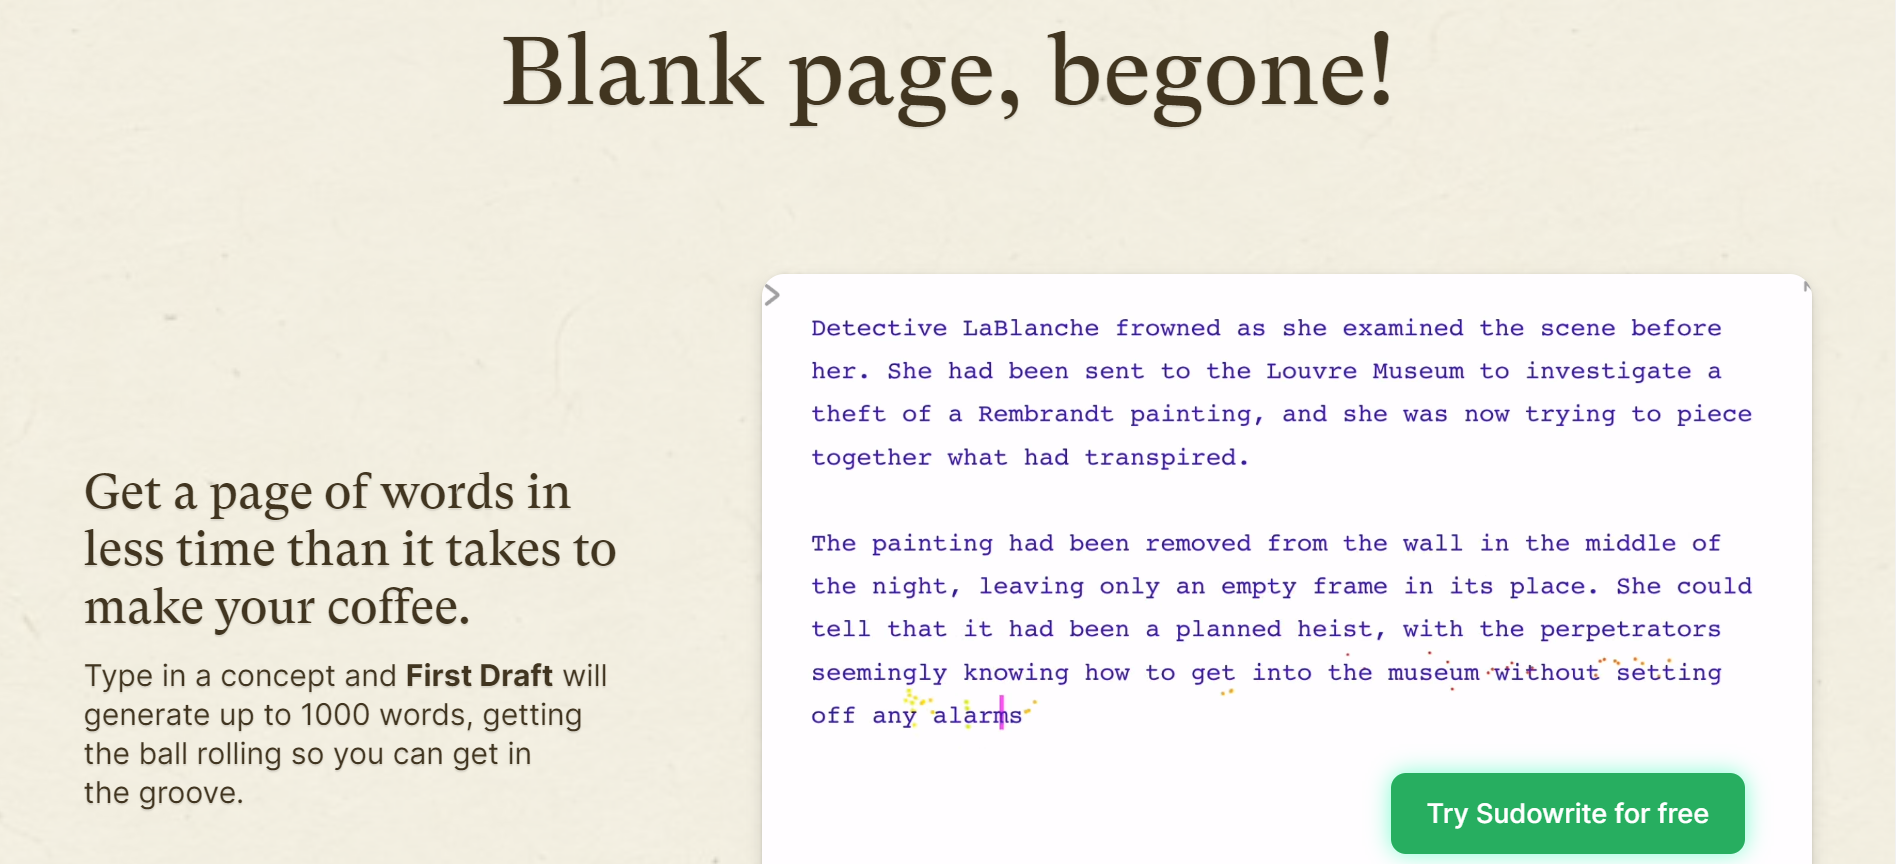 Sudowrite Landing Page - Blank page, begone!